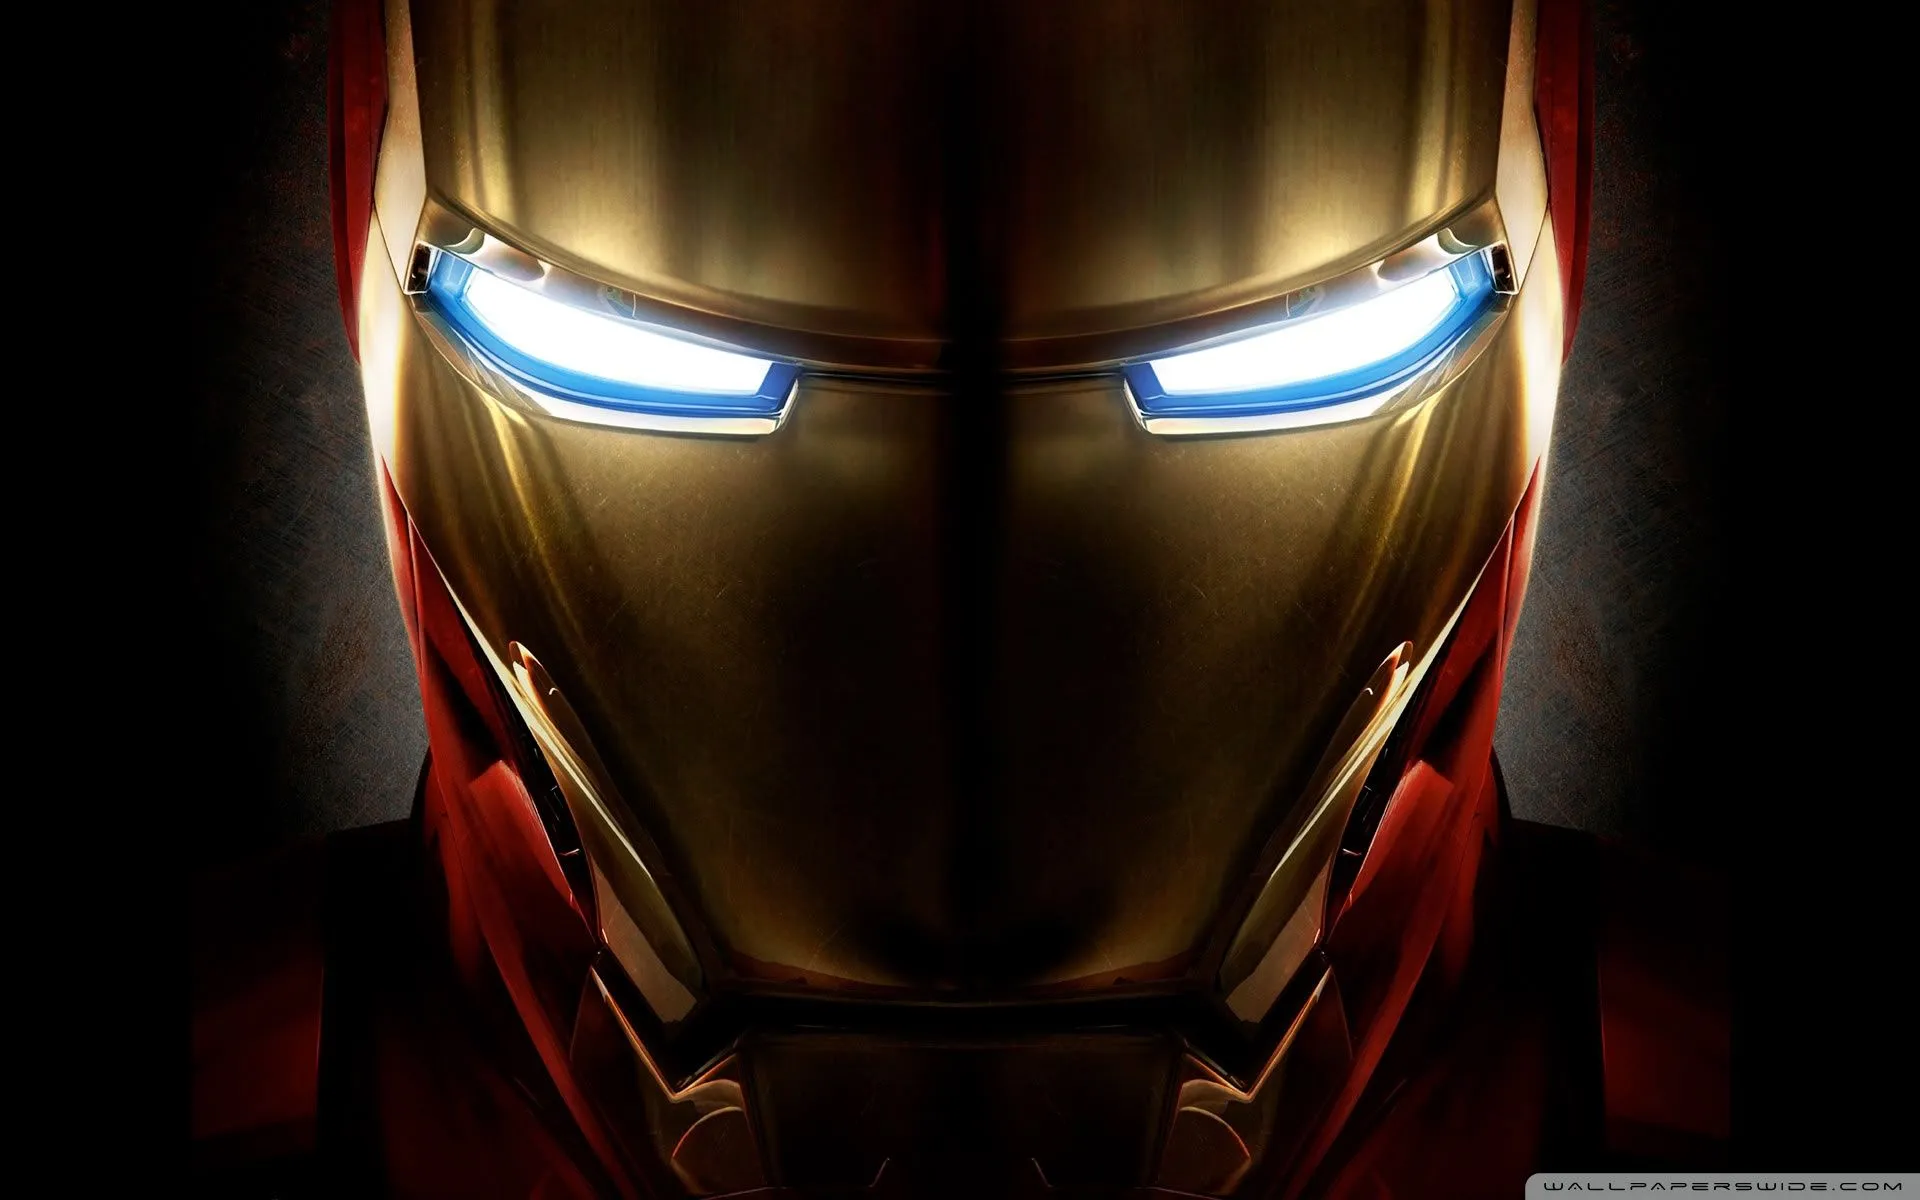 Iron Man Backgrounds